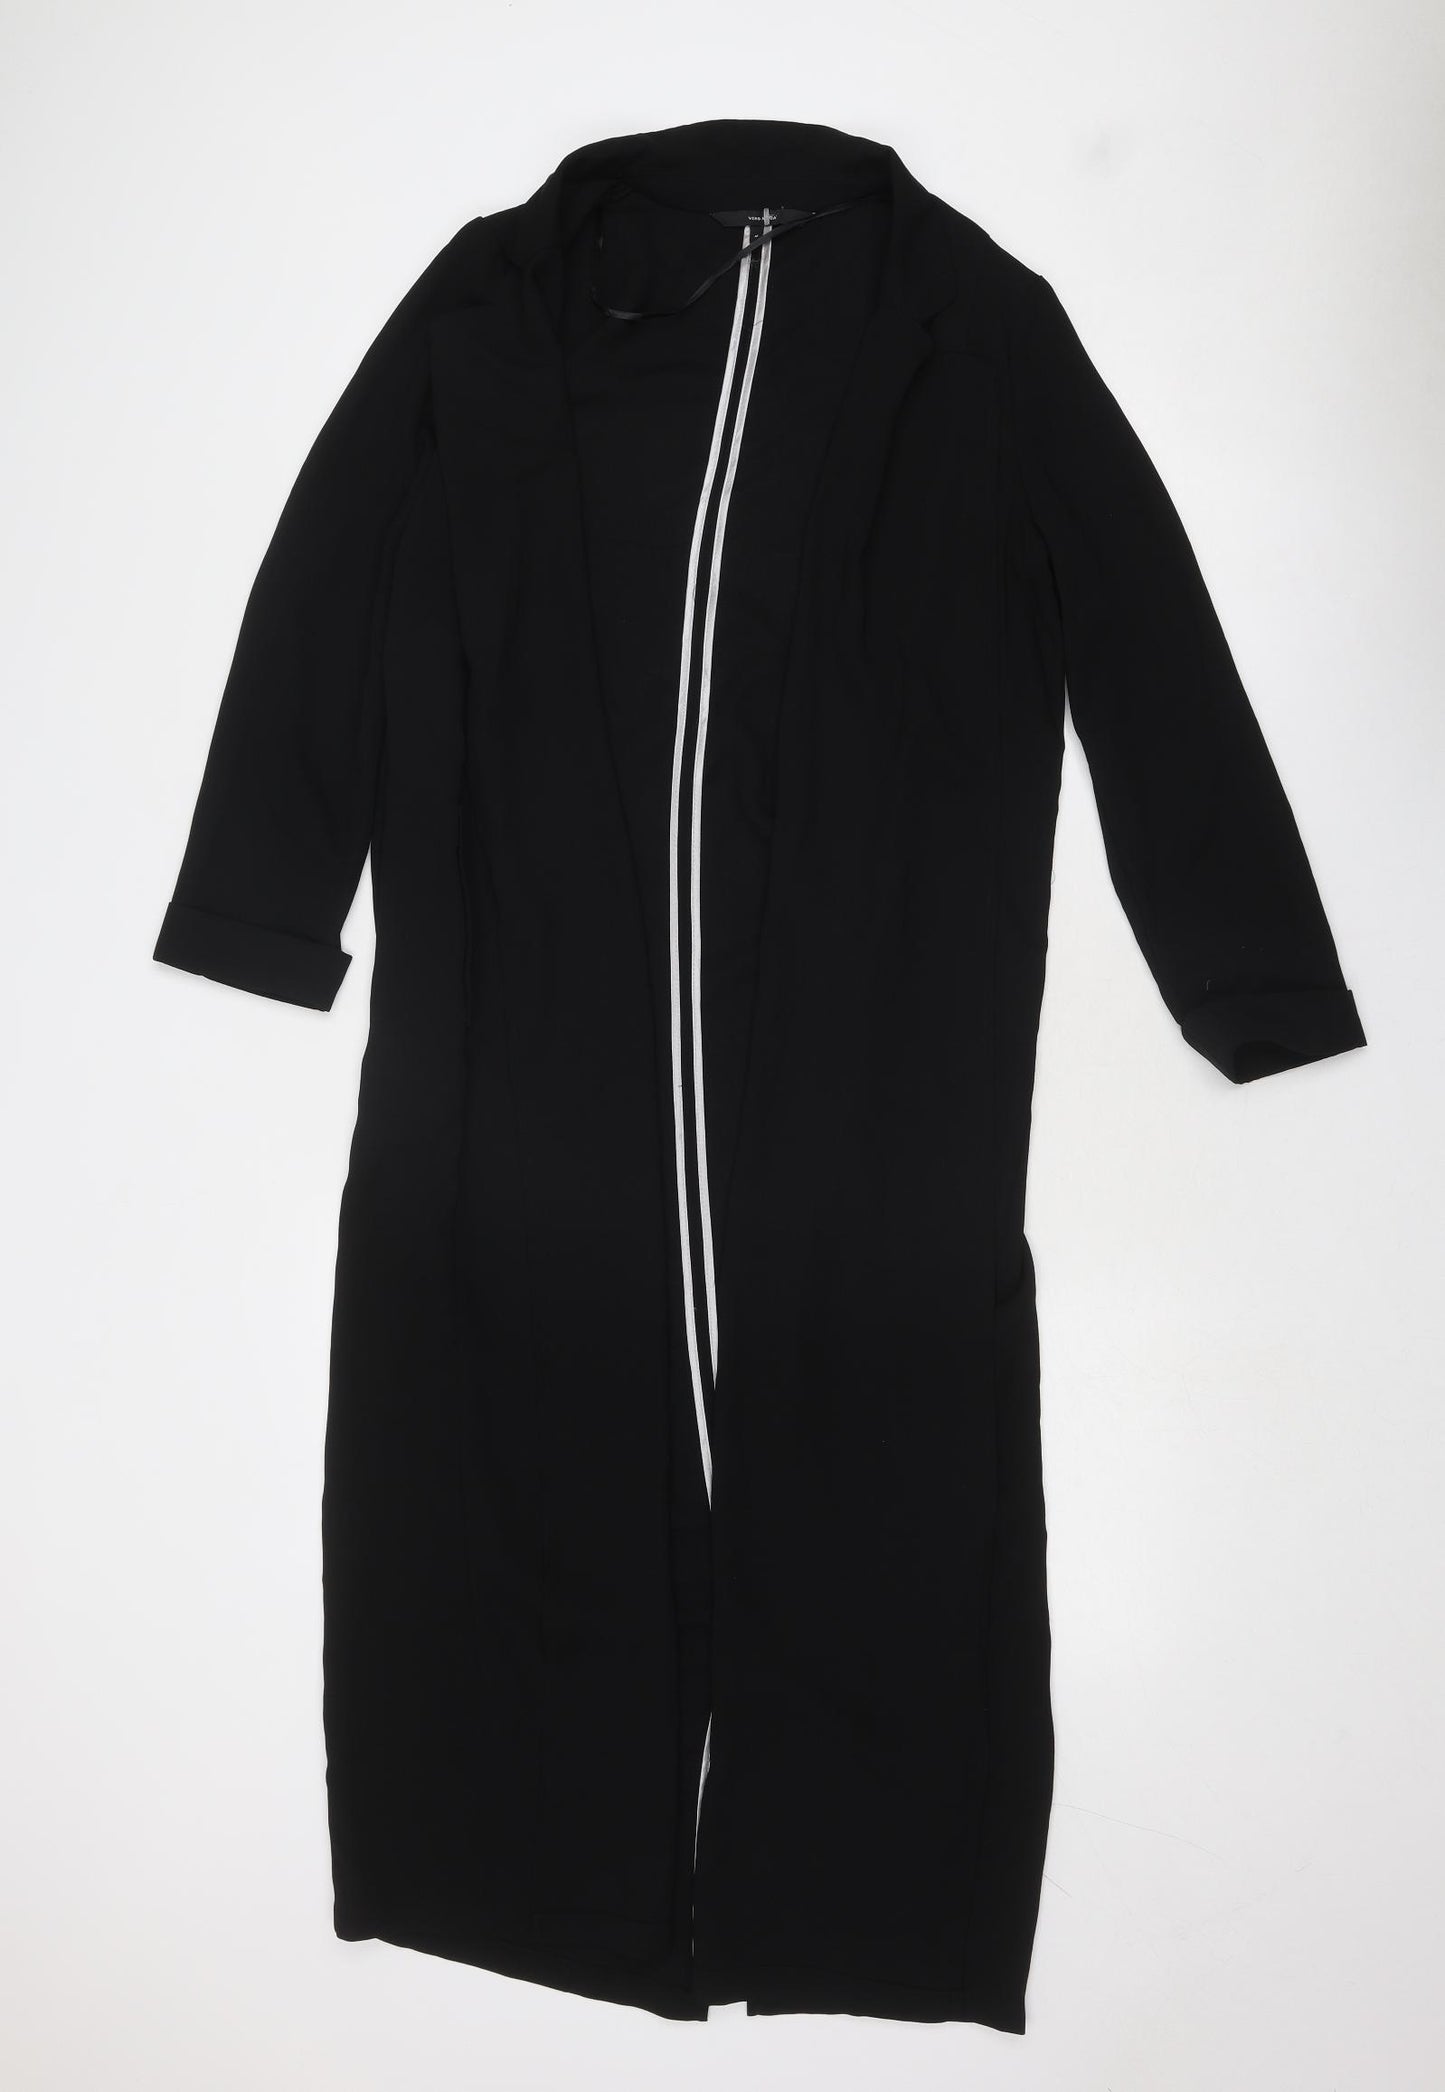 Vera Moda Womens Black Overcoat Jacket Size M